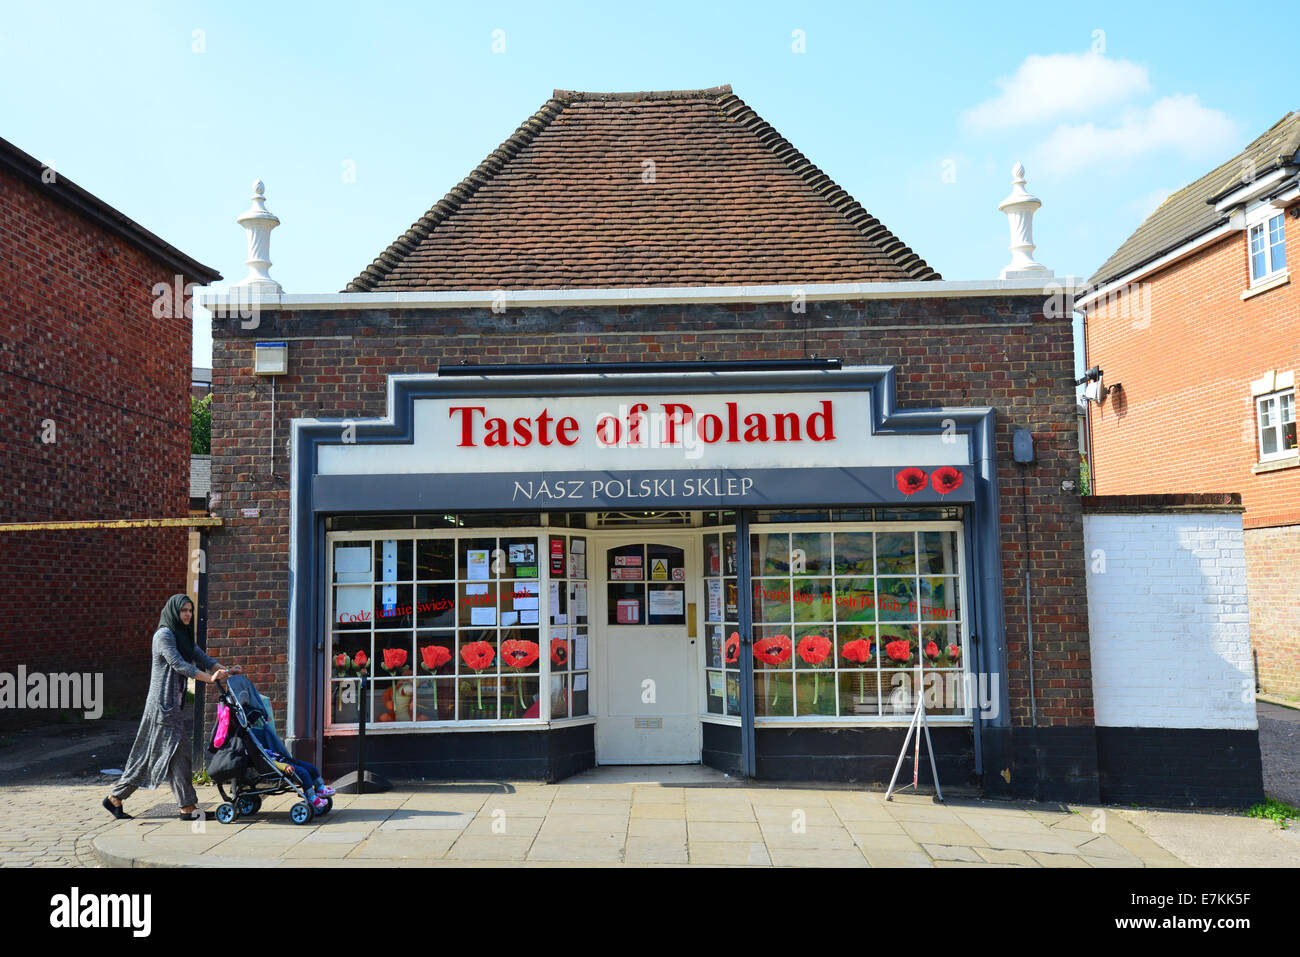 Le goût de la Pologne' Polish, Bridge Street, Aylesbury, Buckinghamshire, Angleterre, Royaume-Uni Banque D'Images